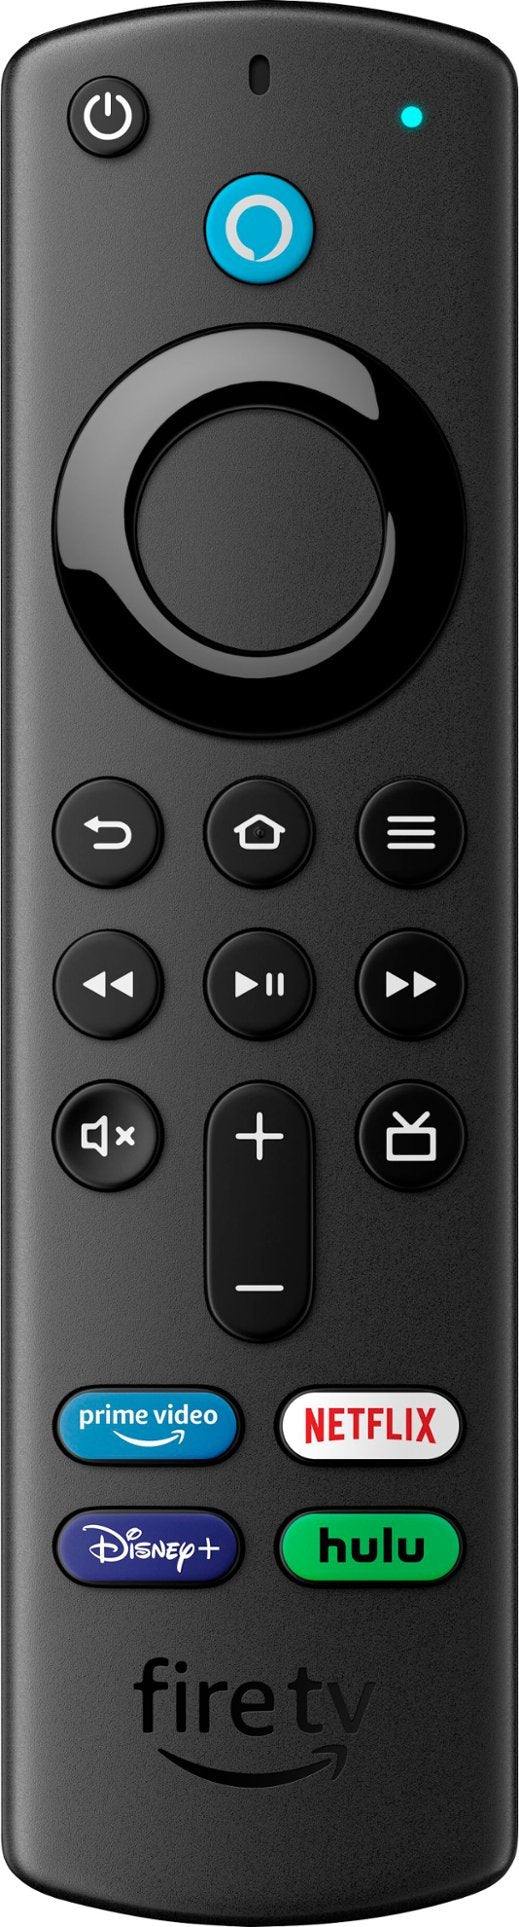 Amazon Fire TV Stick 4K Max Streaming Media Player w/ Alexa Voice Remote - Black (Certified Refurbished)